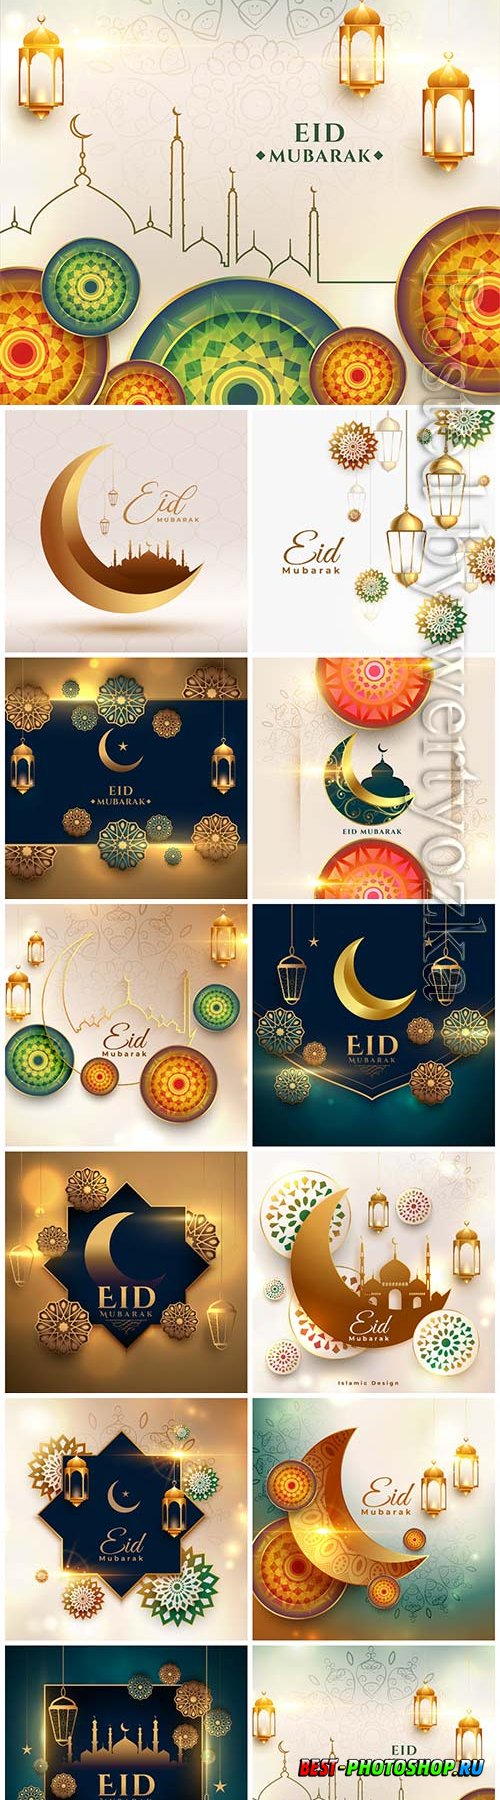 Eid mubarak religious islamic background vector design